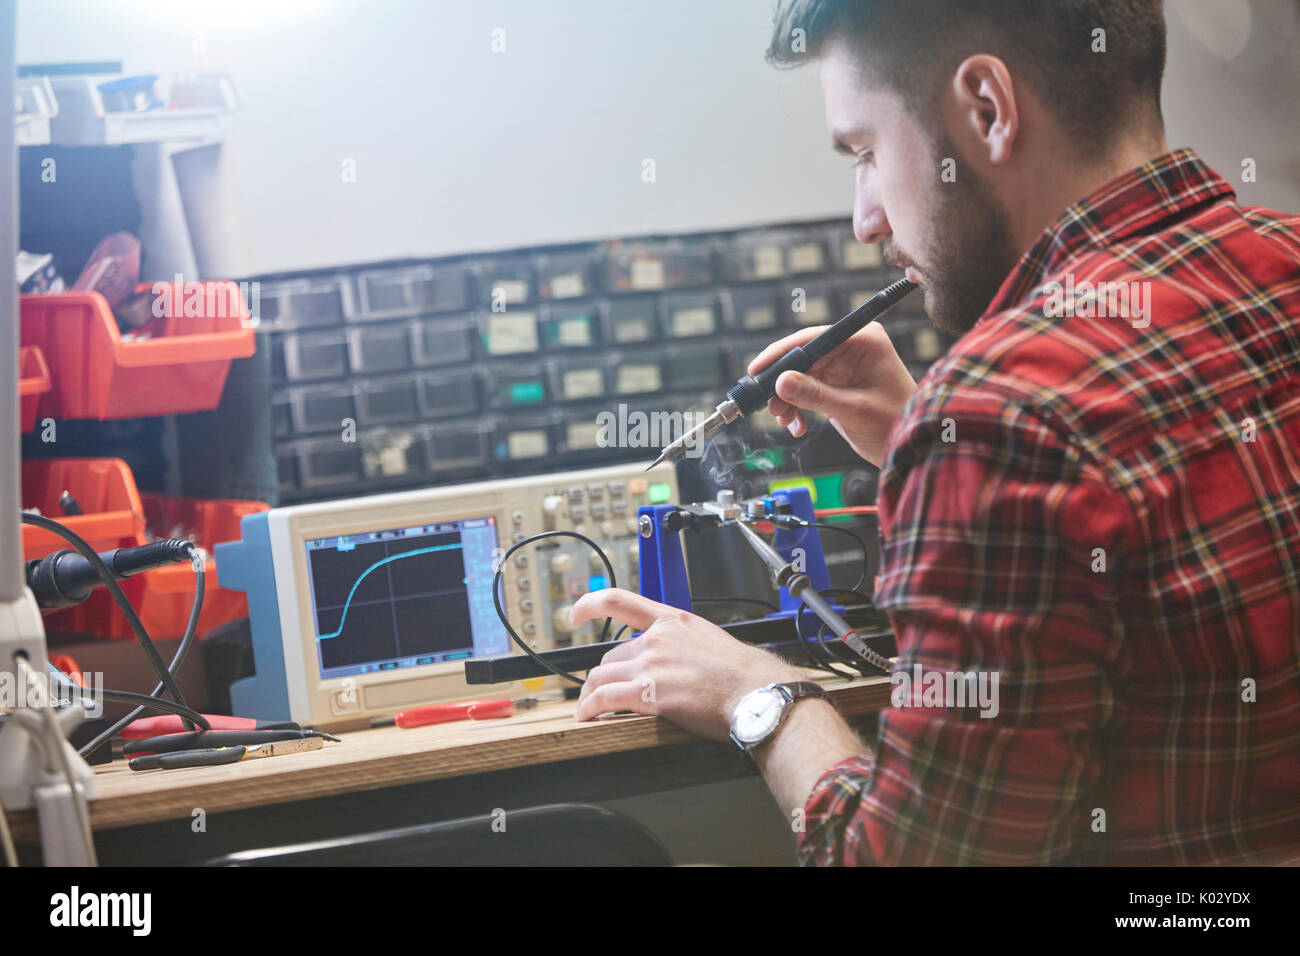 Male engineer assembling electronics, using soldering iron Stock Photo